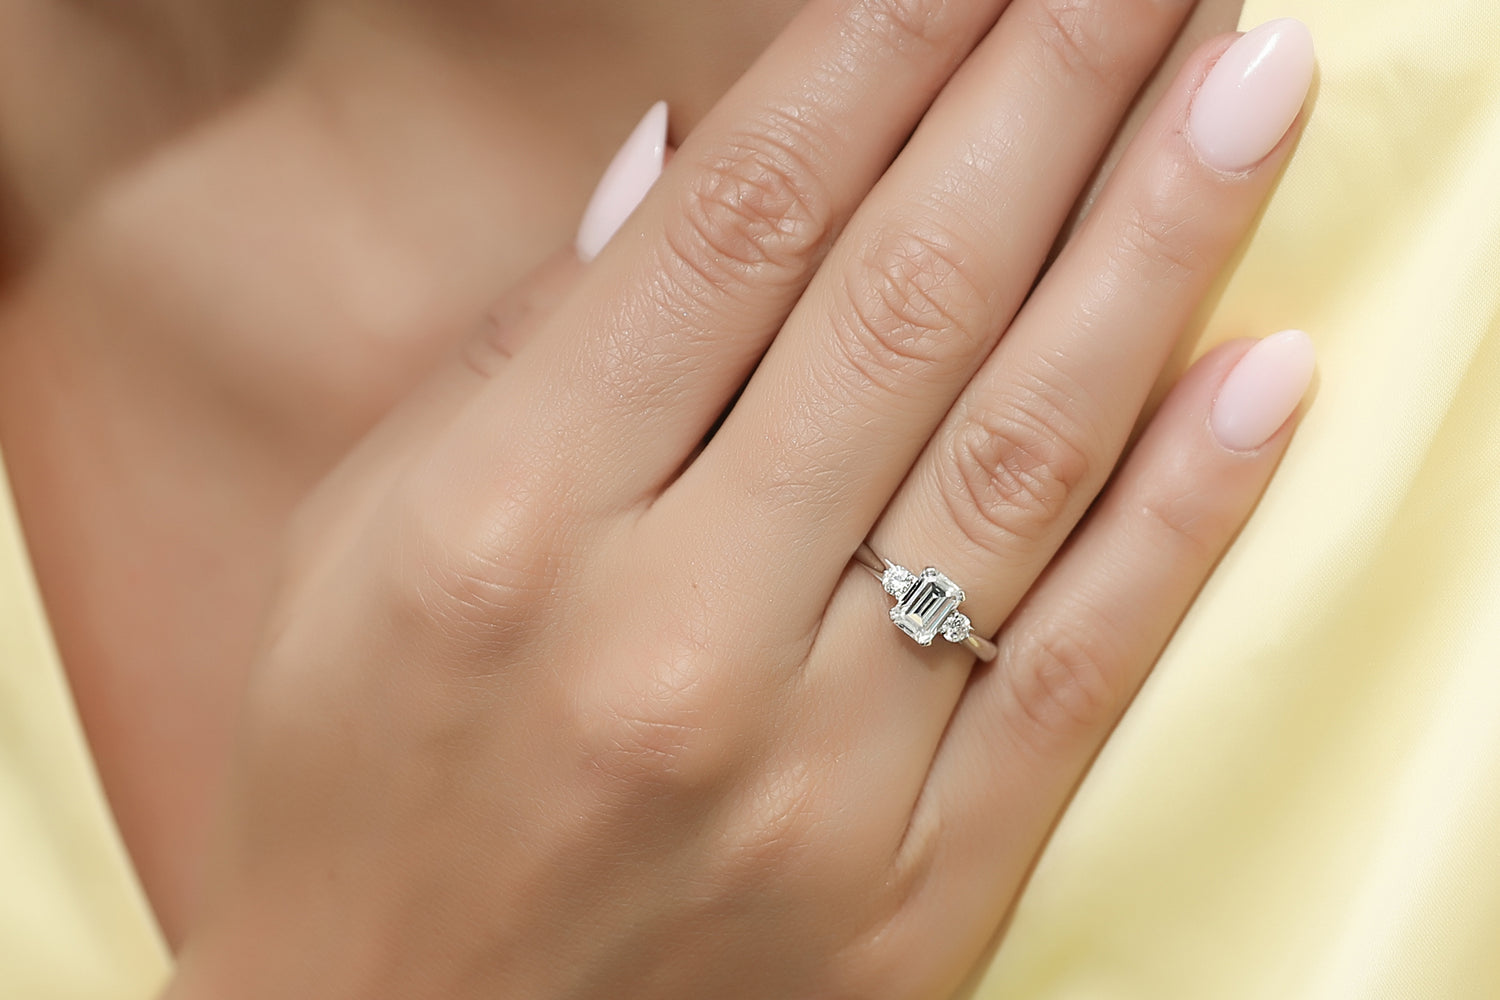 9. Minimalist 3-stone Emerald-Cut Engagement Ring